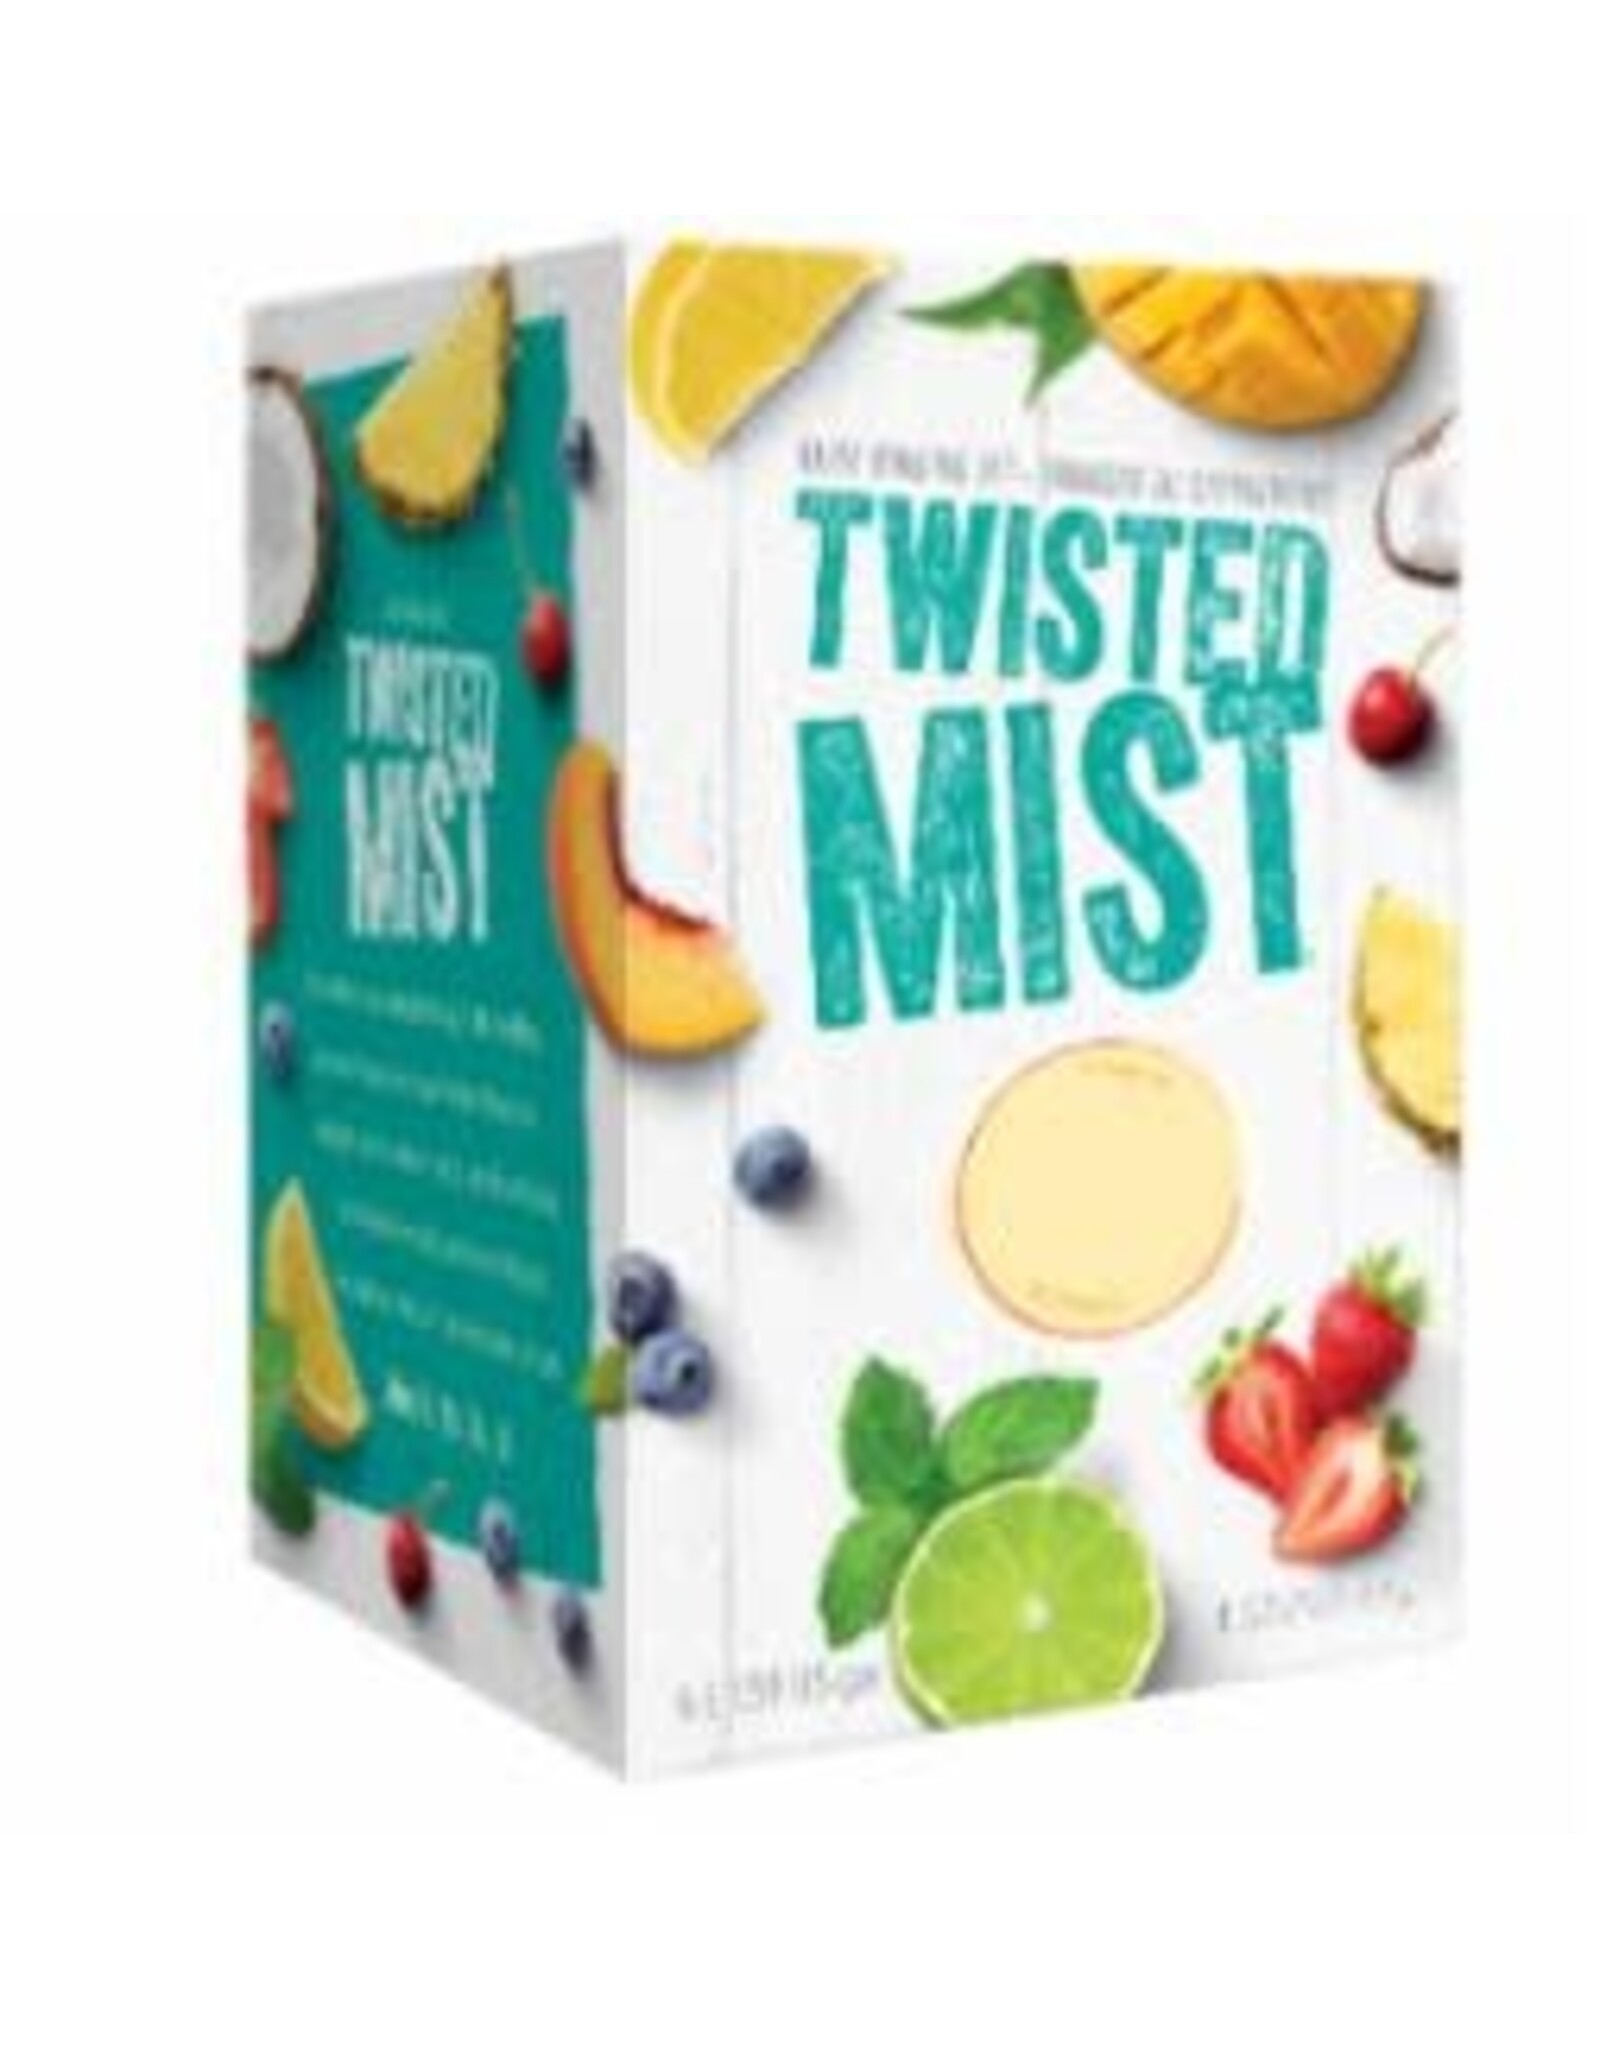 Twisted Mist Winexpert 1.59gal White Peach Lemonade